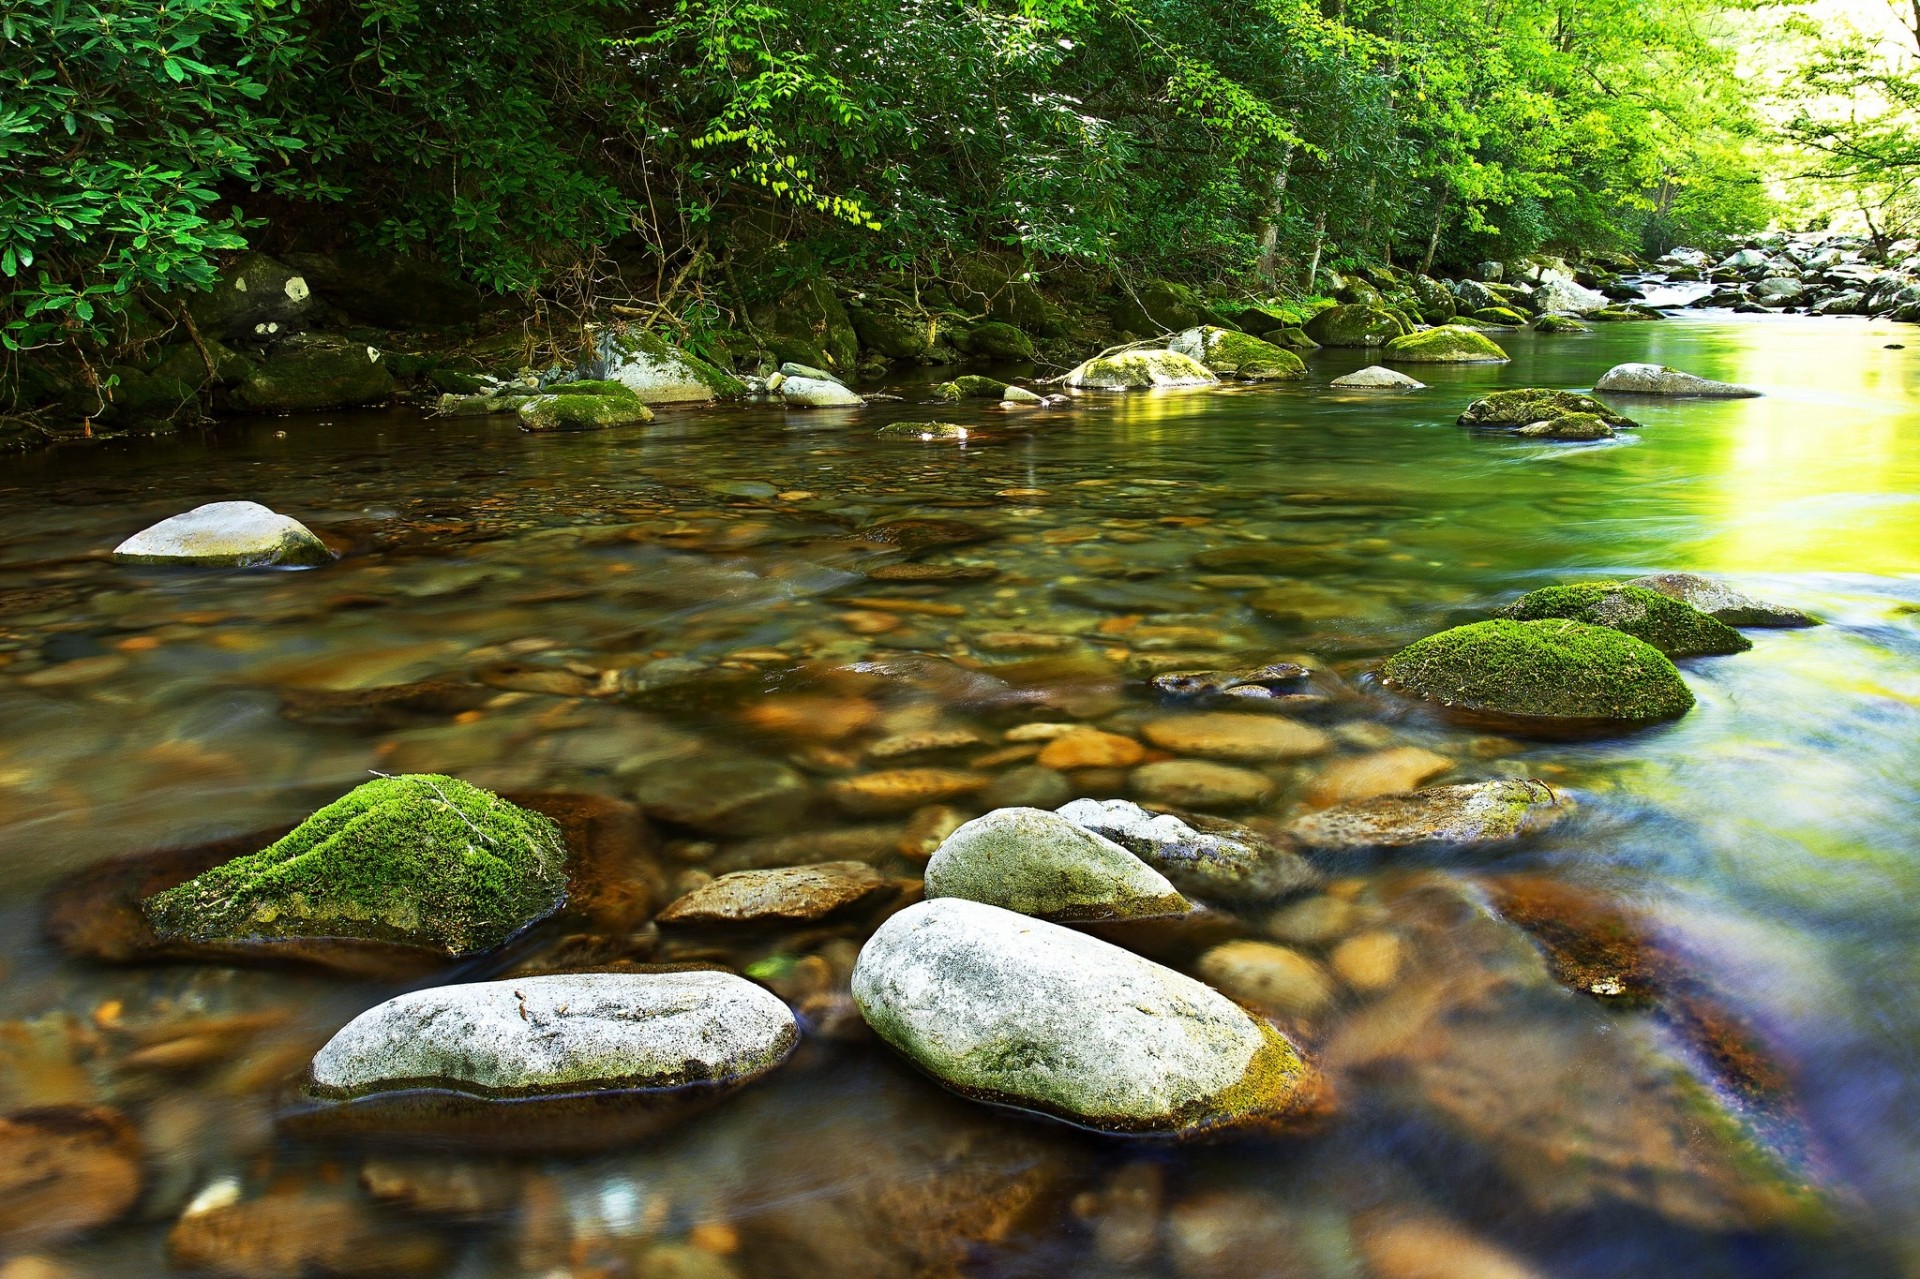 Stone river. Речка Каширка камни. Каменистый берег реки. Камни валуны берег река.